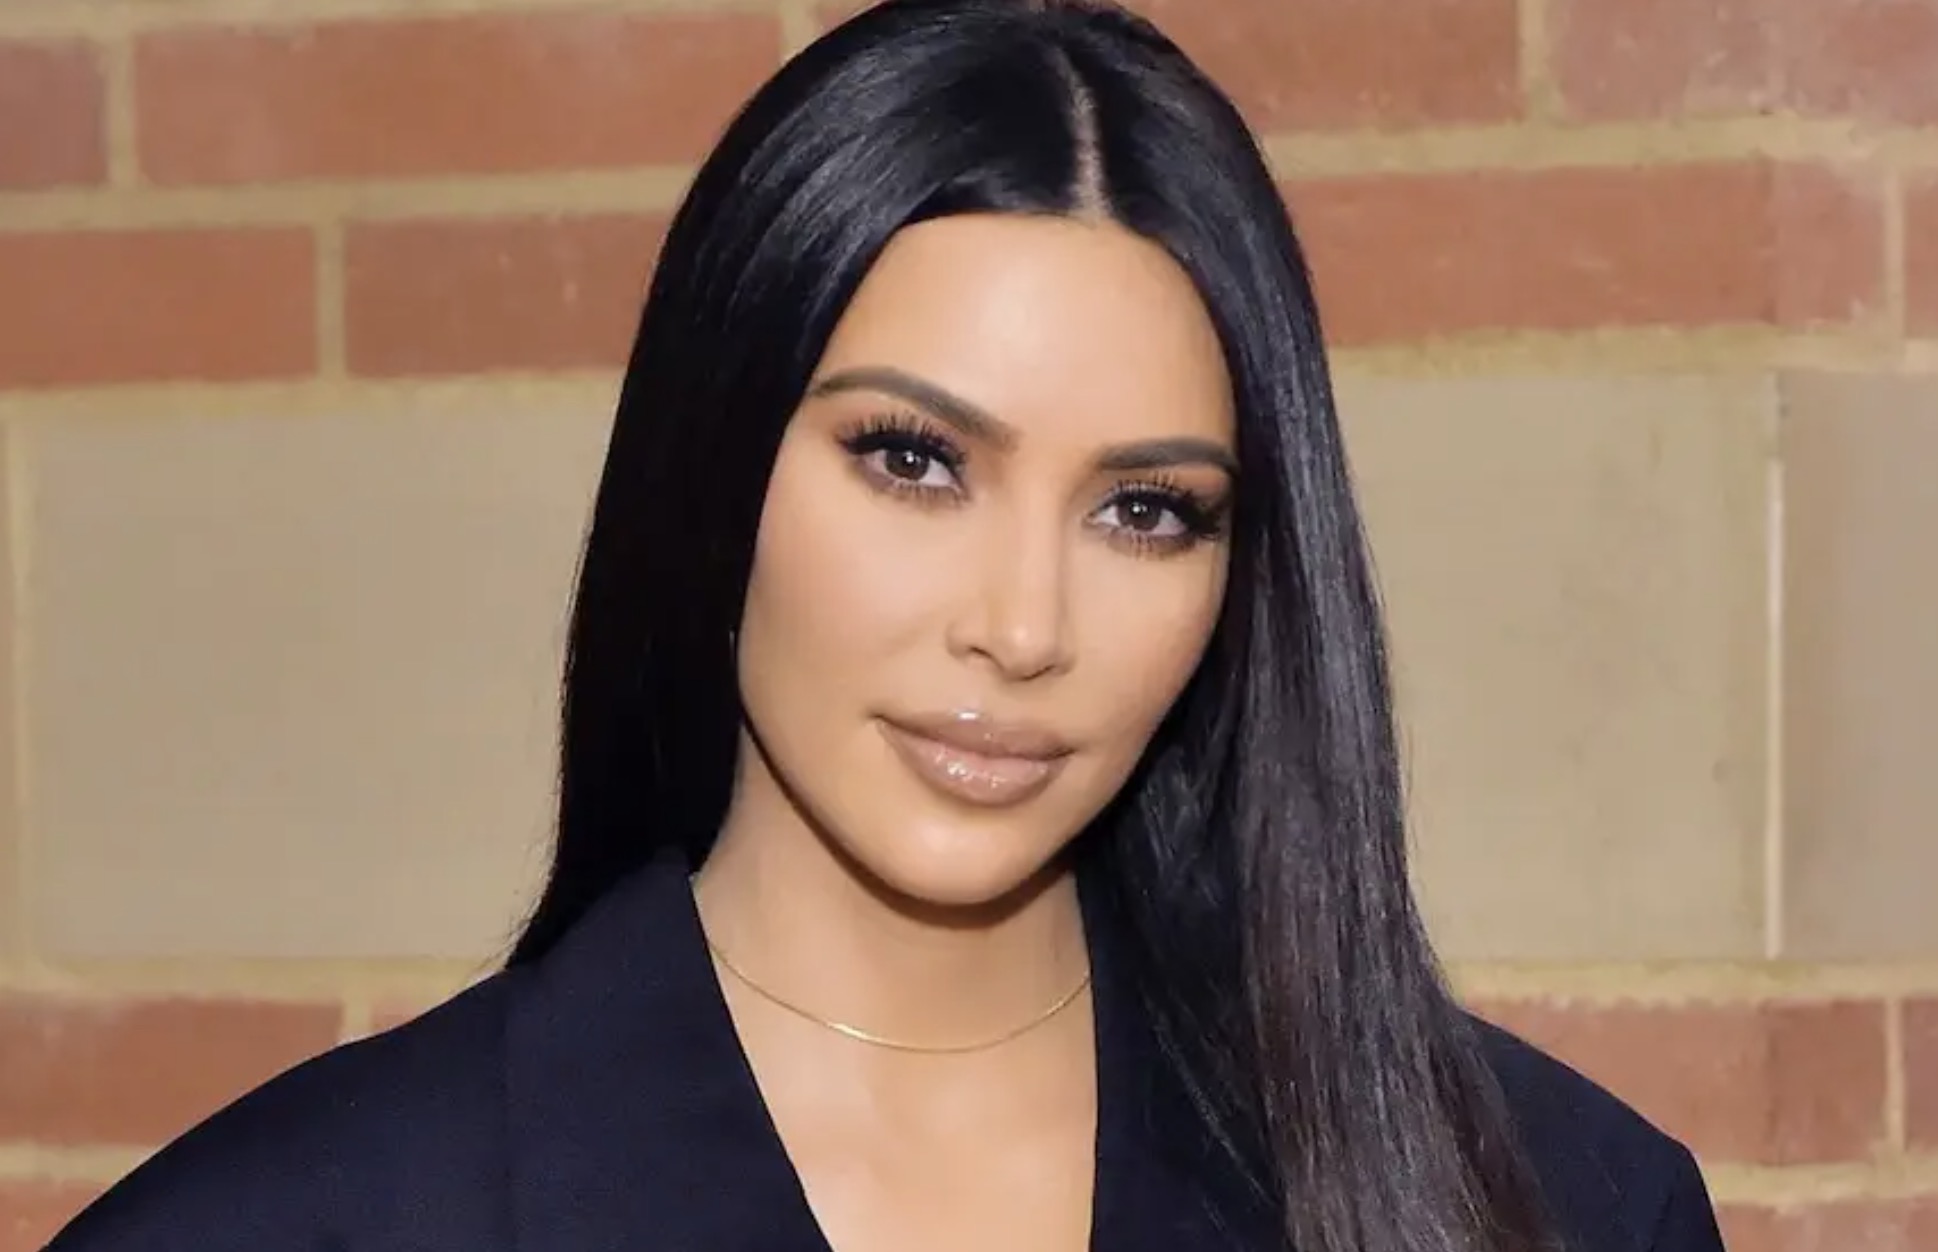 What’s Kim Kardashian’s net worth?